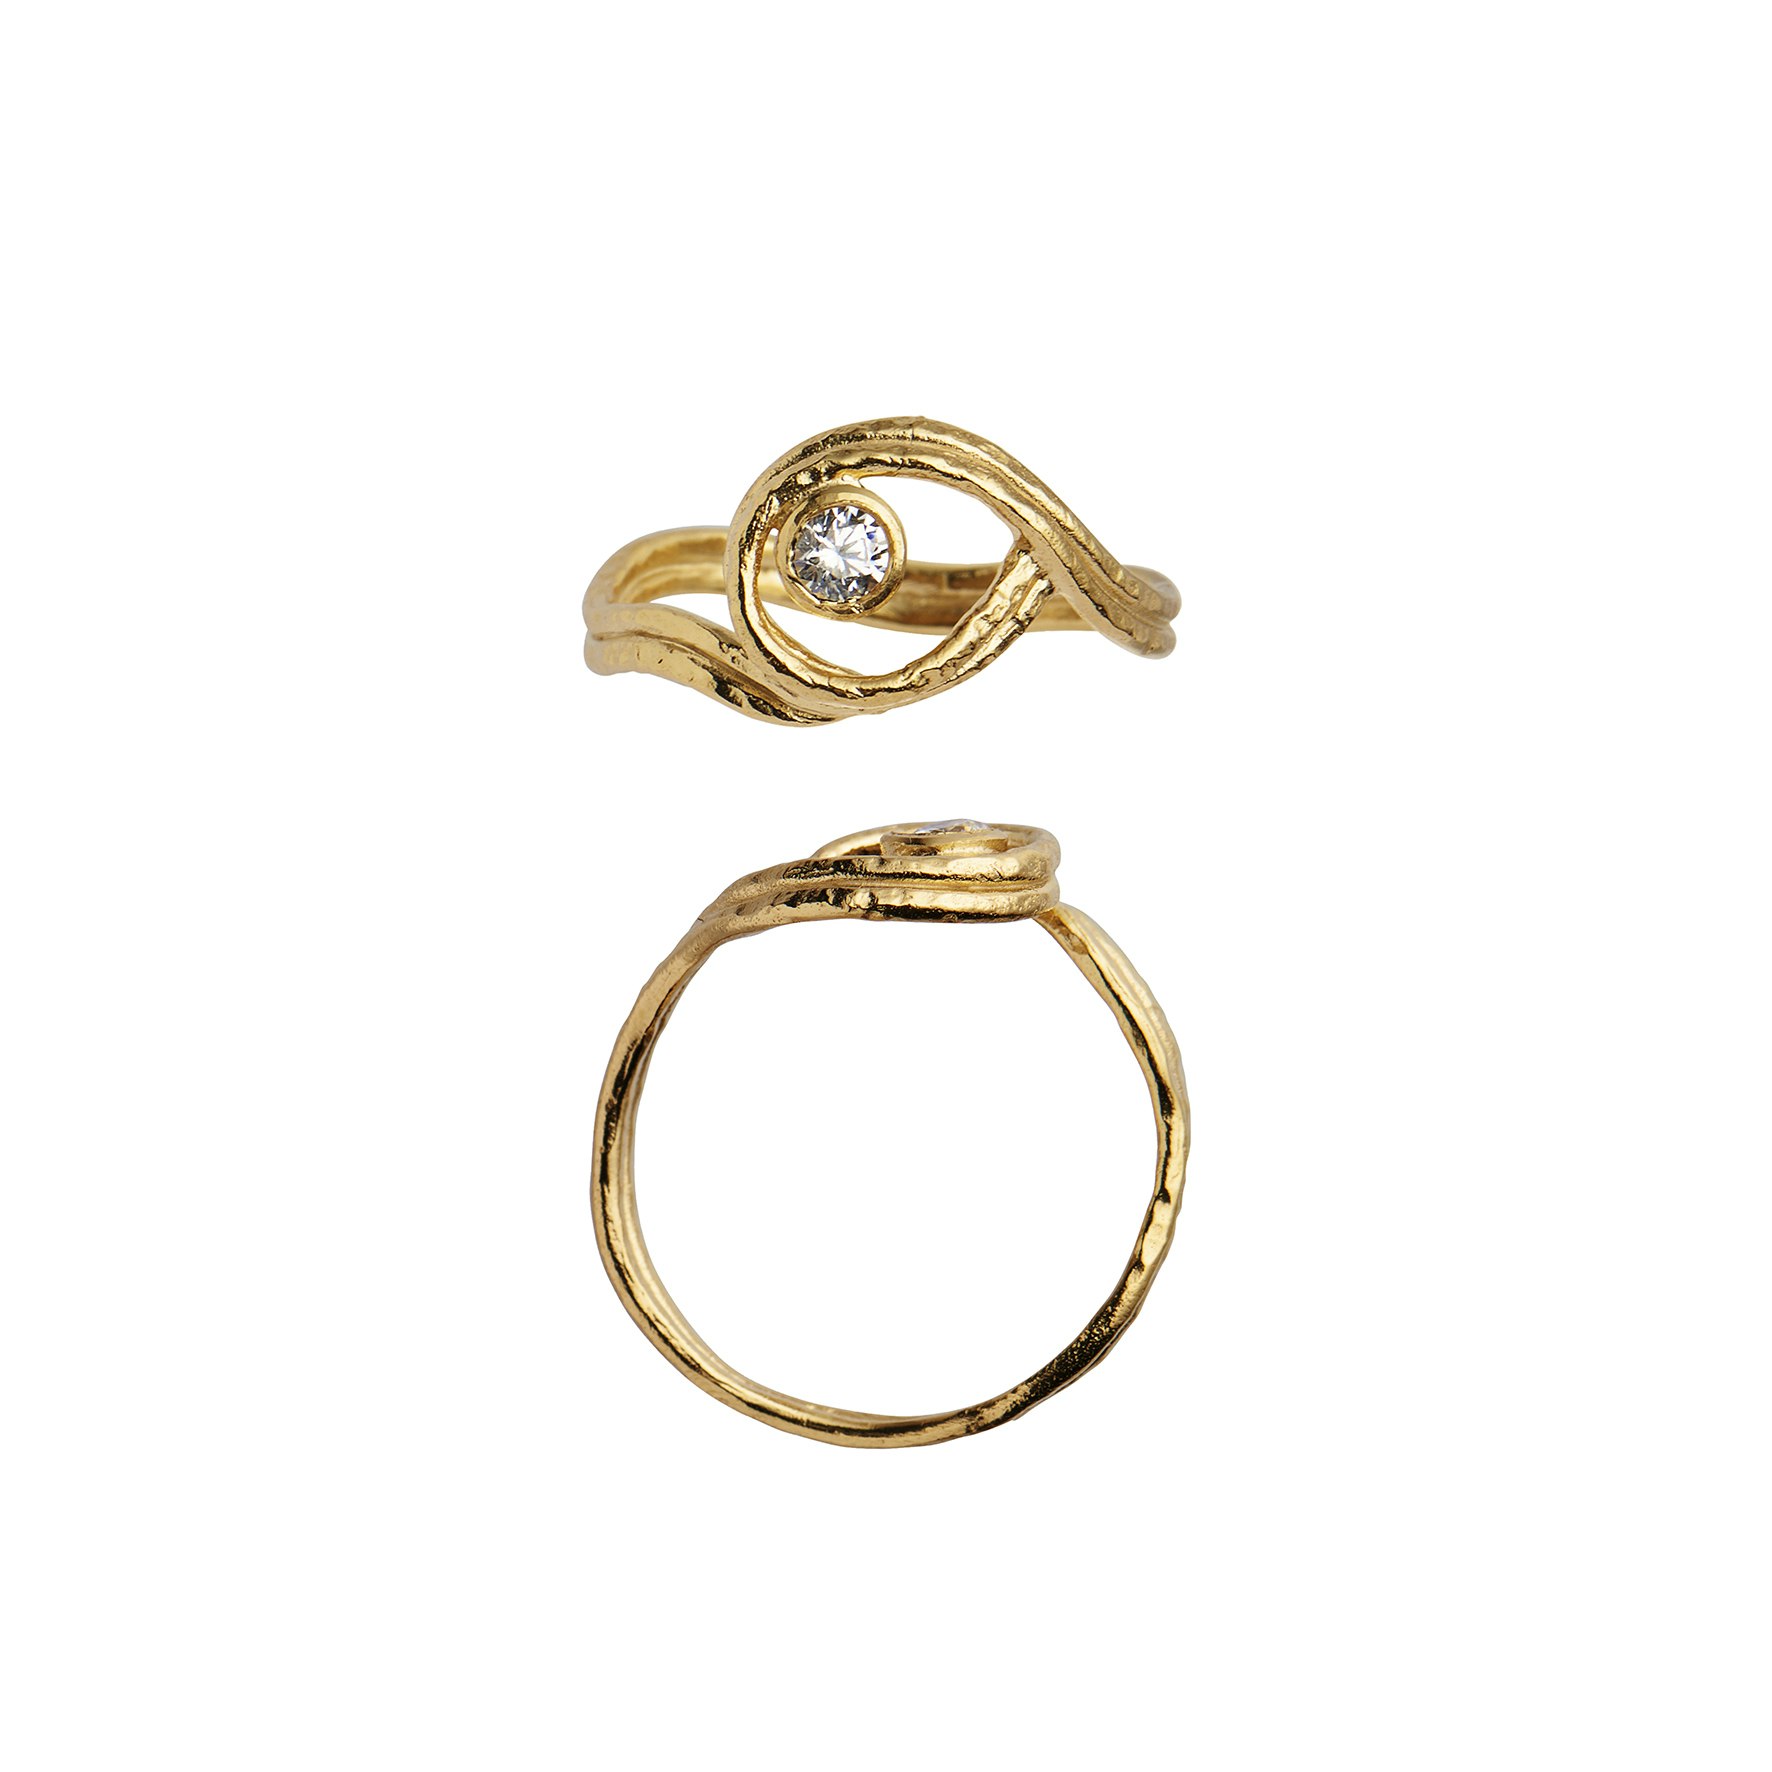 Balance Ring With Stone fra STINE A Jewelry i Forgylt-Sølv Sterling 925